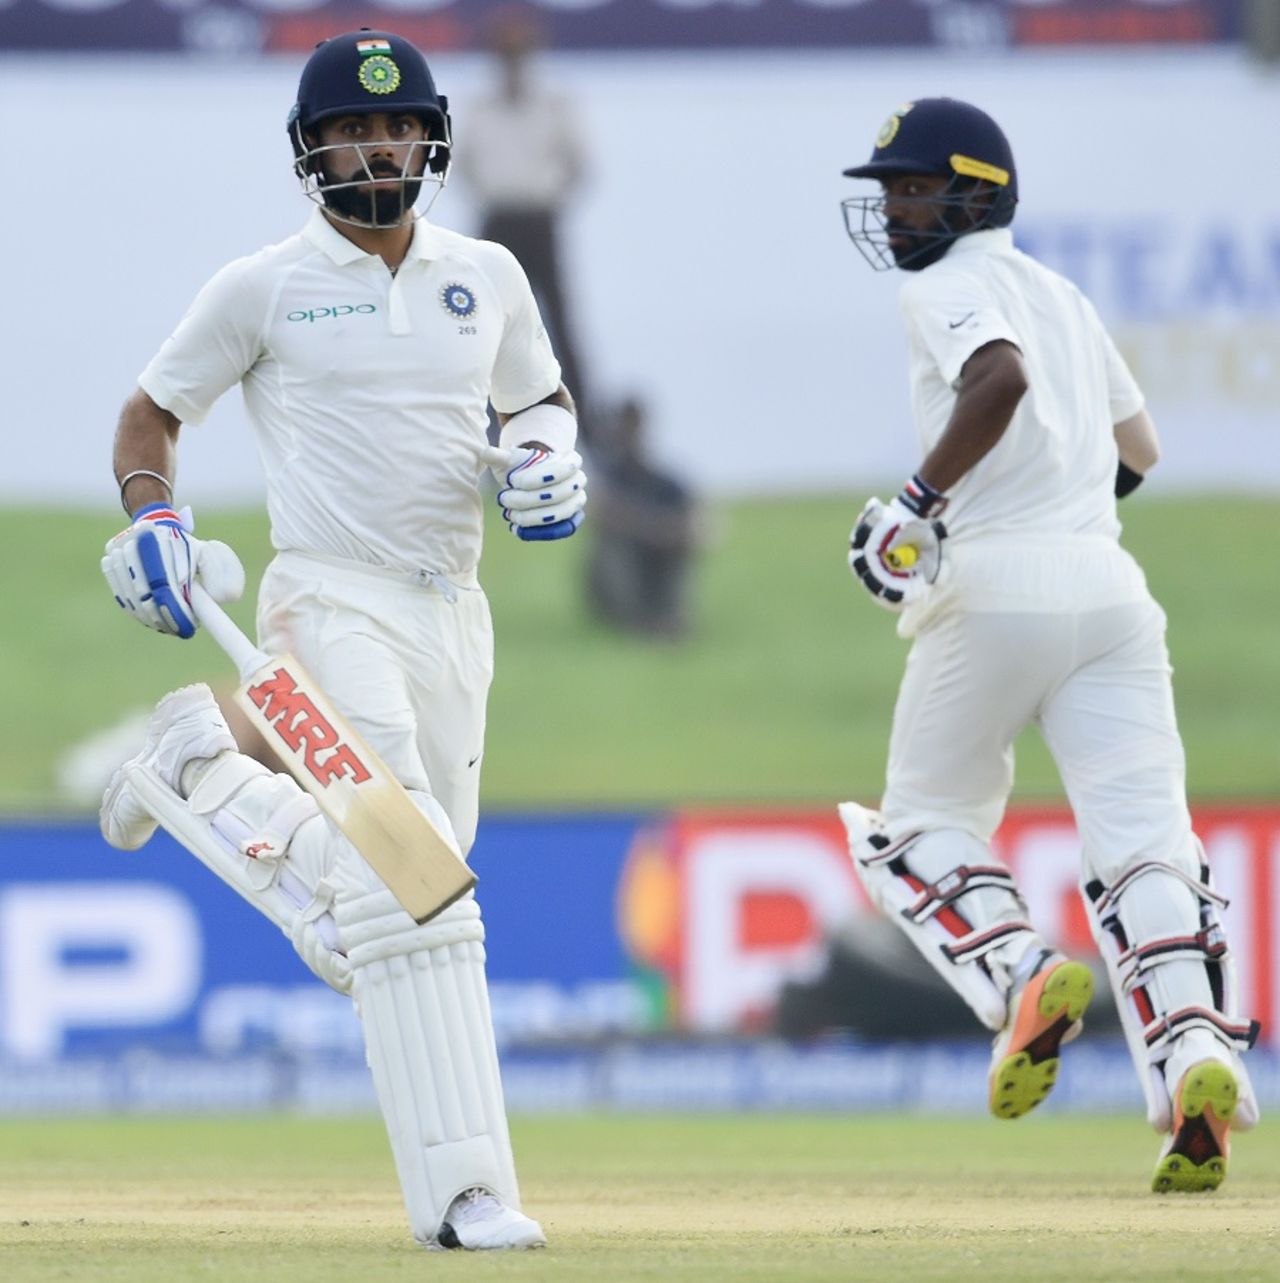 Virat Kohli and Abhinav Mukund stretched India's lead past 450, Sri Lanka v India, 1st Test, Galle, 3rd day, July 28, 2017